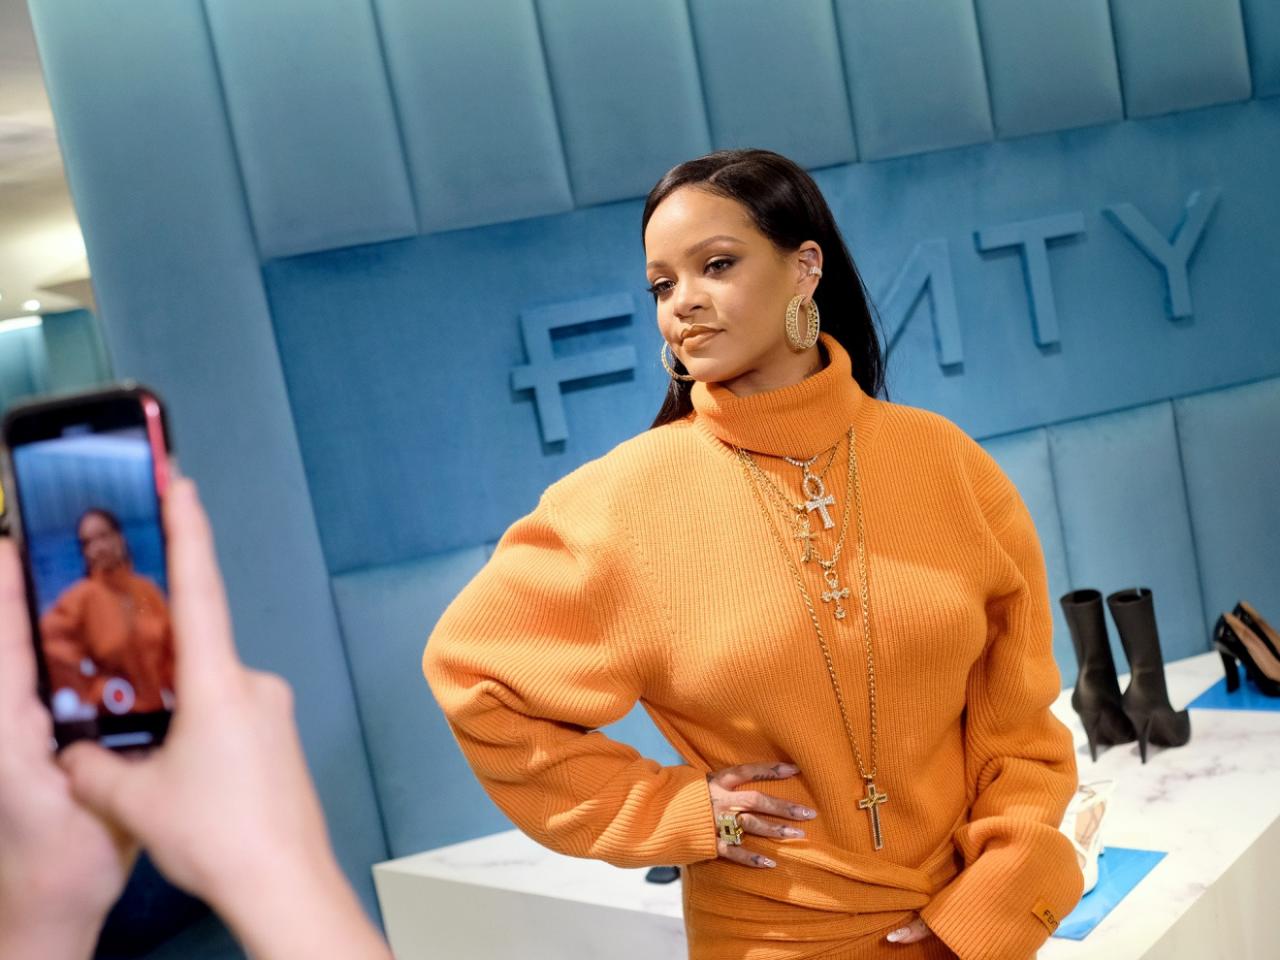 Rihanna emerges as America?s youngest self-made billionaire woman worth $1.4 billion